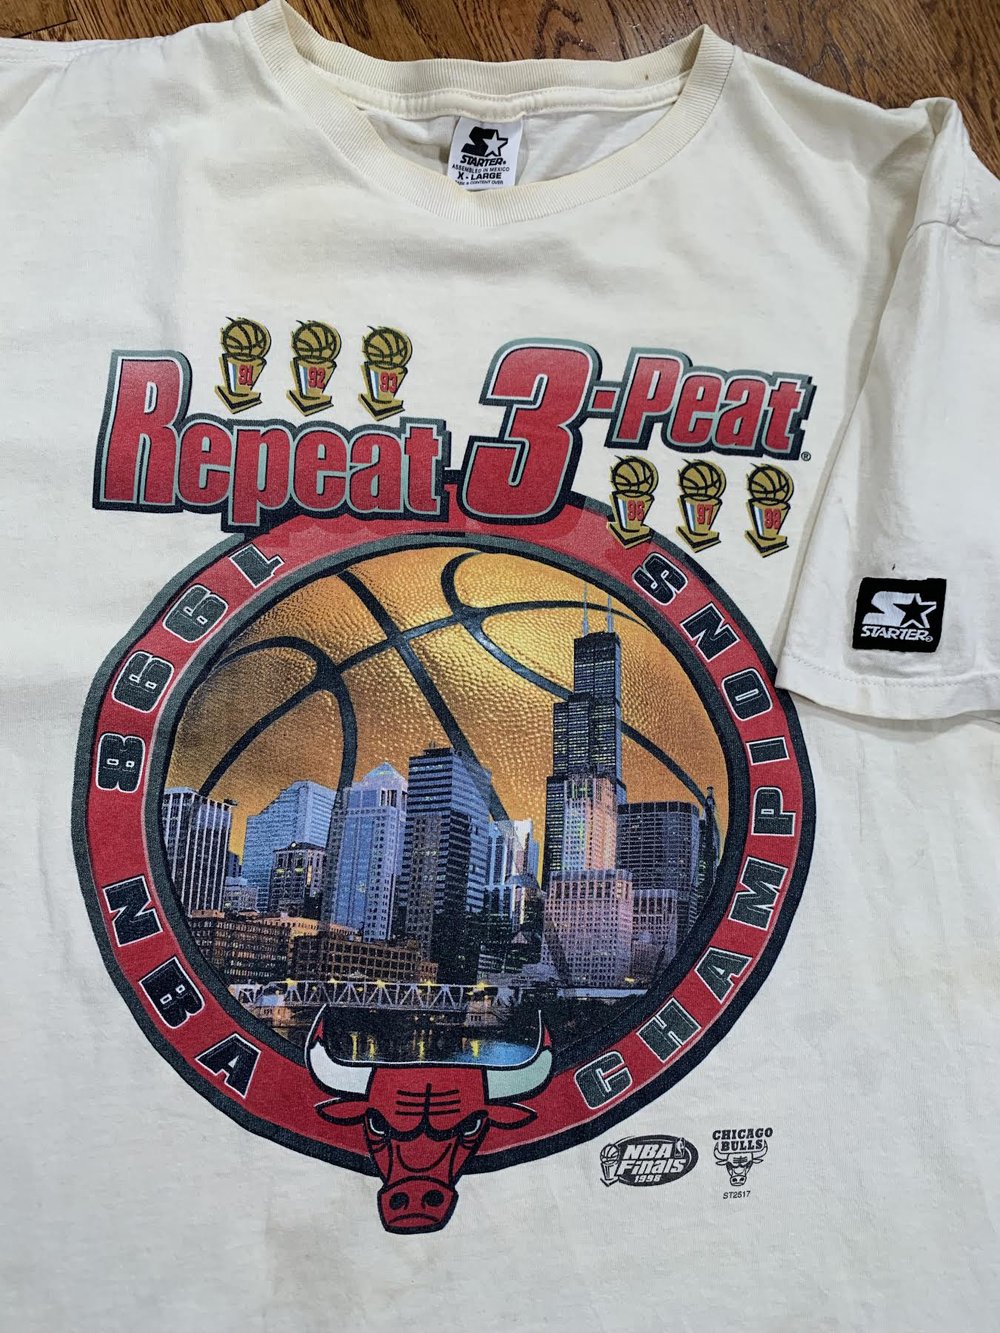 1998 Chicago Bulls 'Repeat 3 Peat' Logo T-Shirt